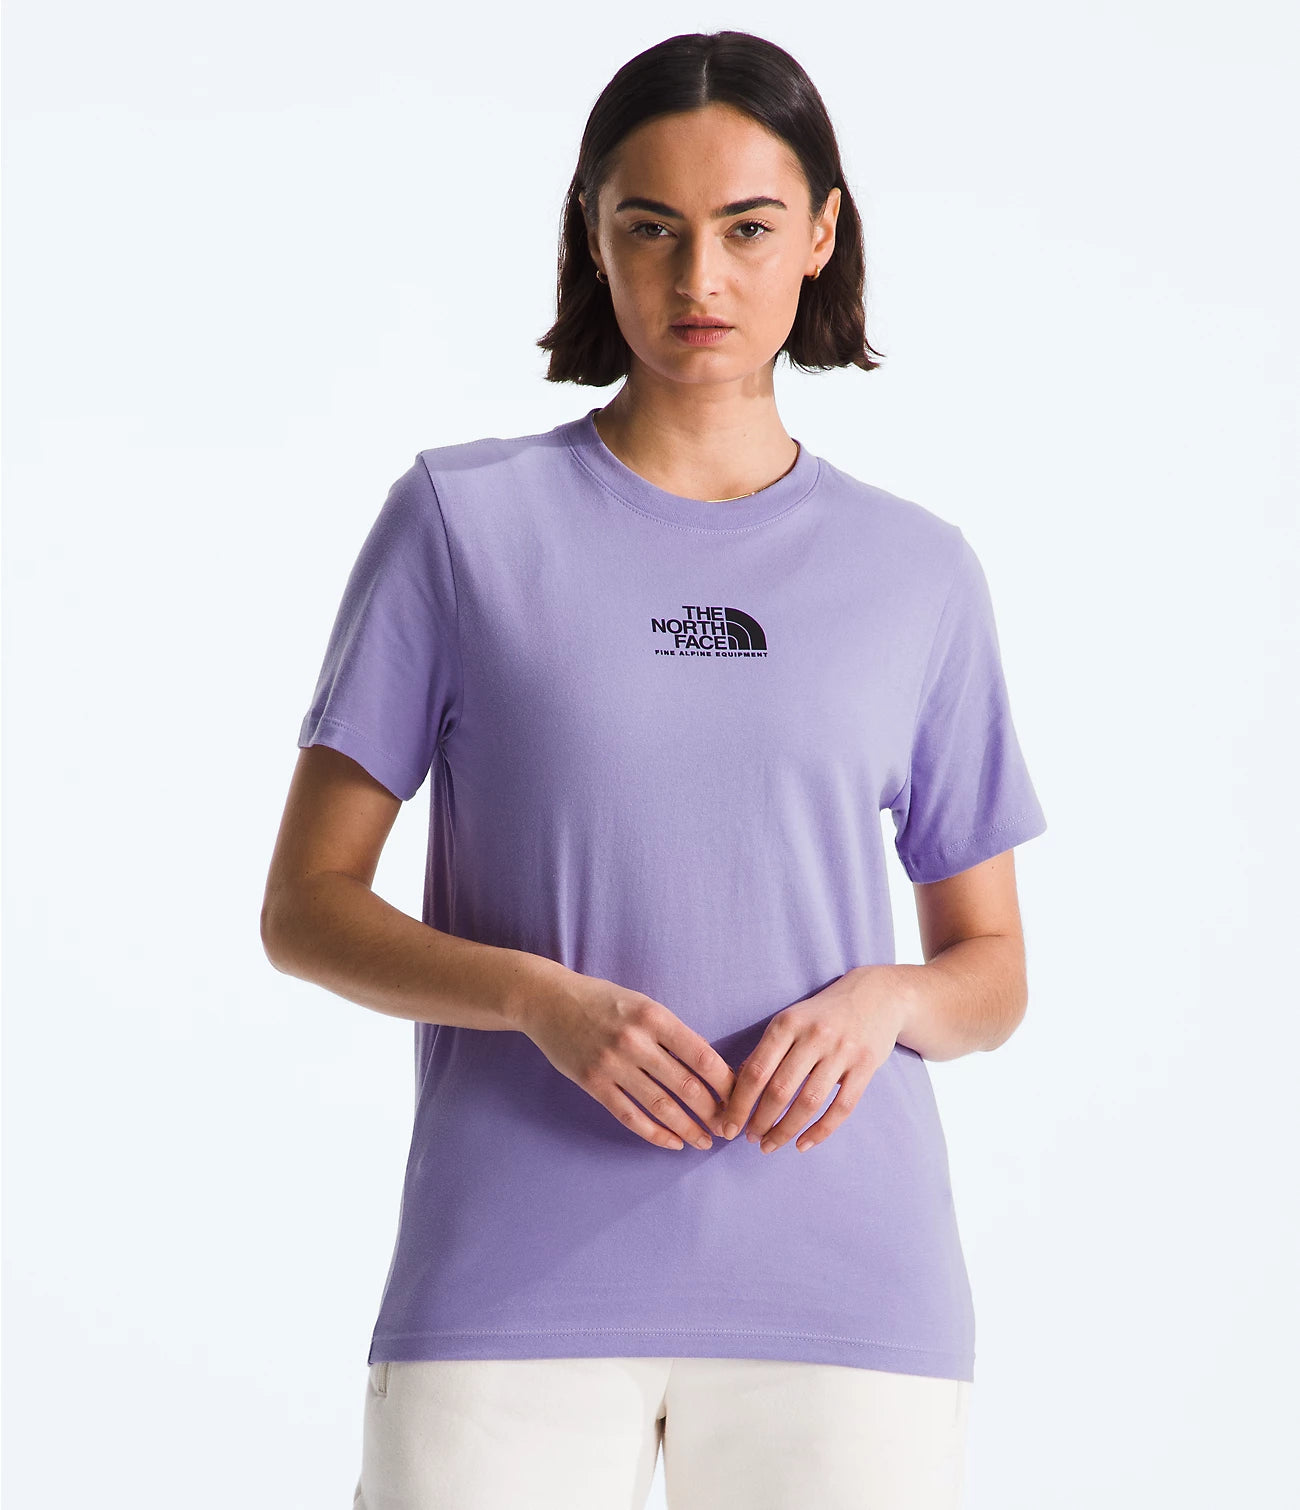 Women’s court-Sleeve Fine de style alpin t-shirt - HIGH PURPLE